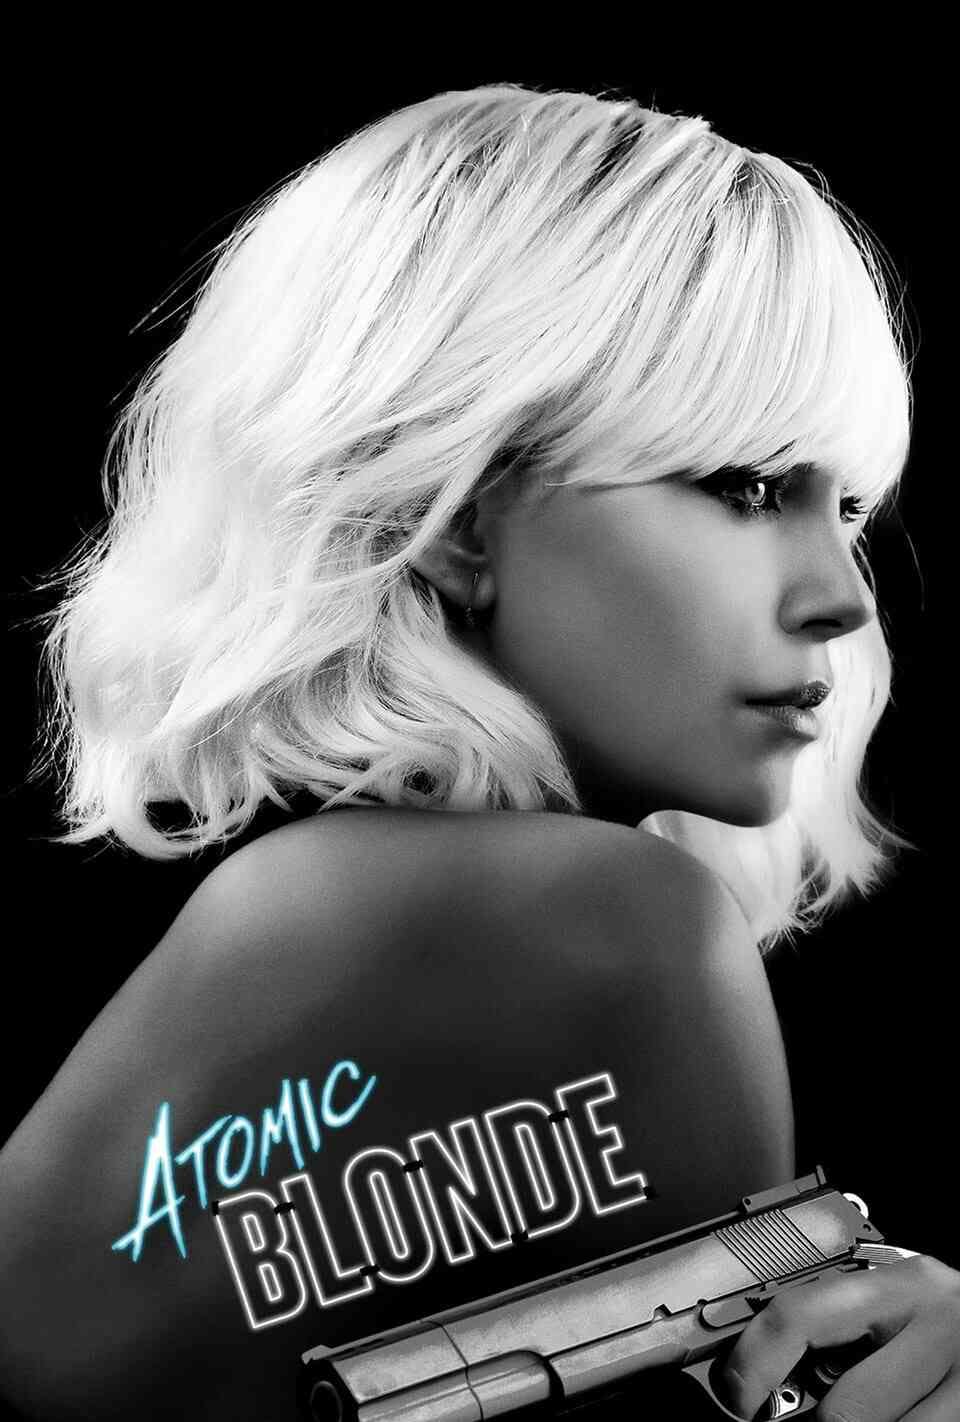 Read Atomic Blonde screenplay (poster)